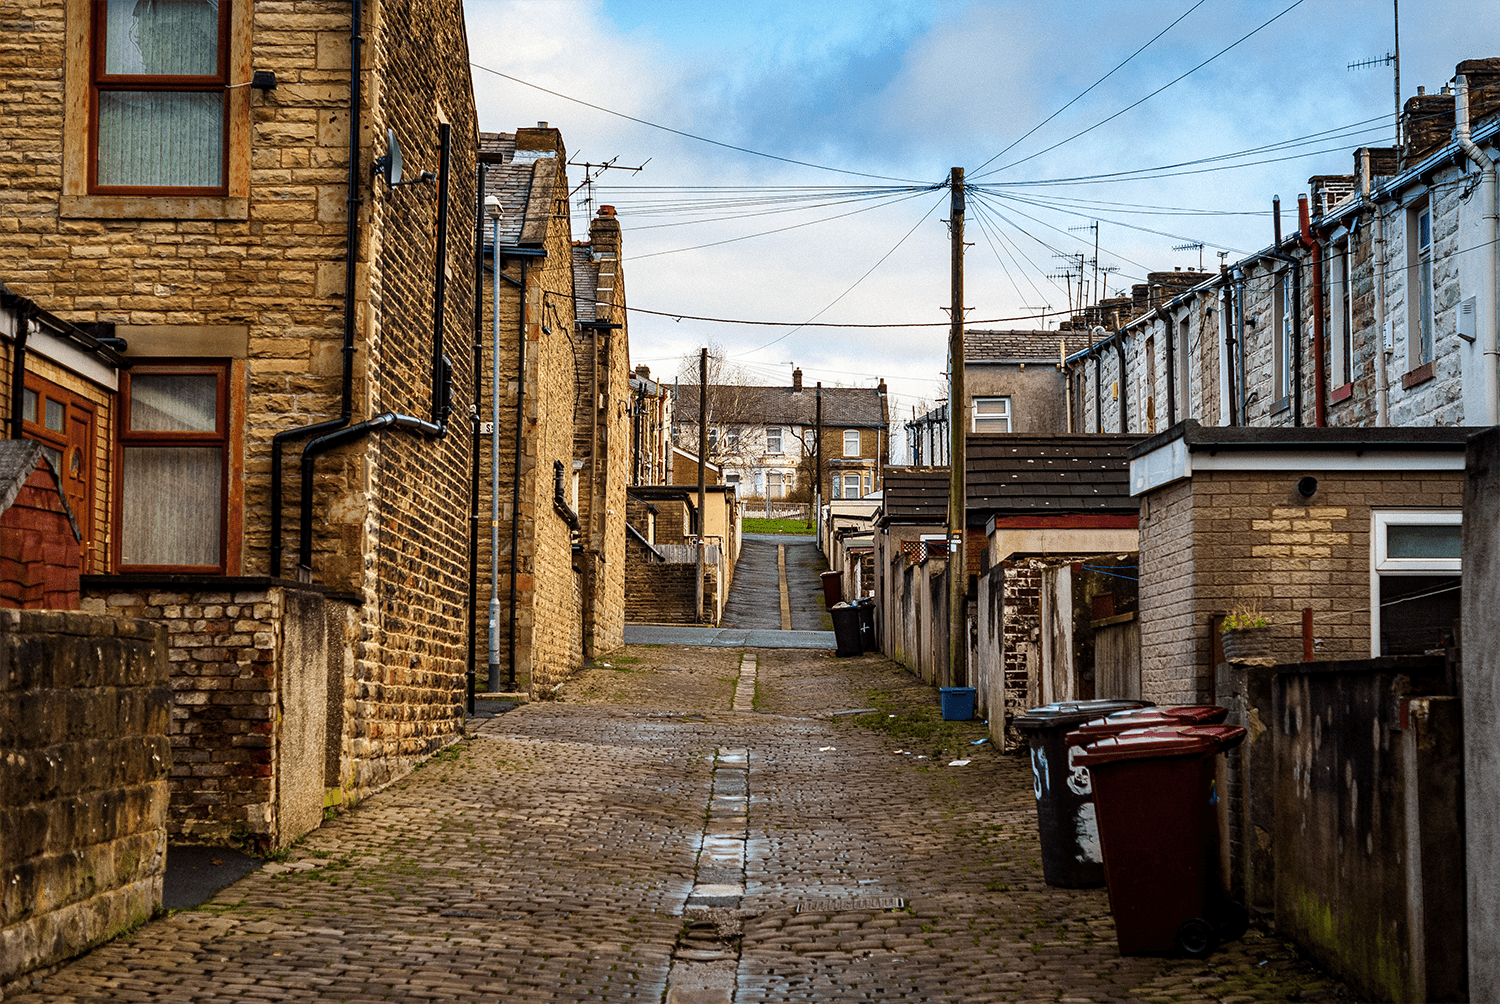 An alleyway in a neighbourhood